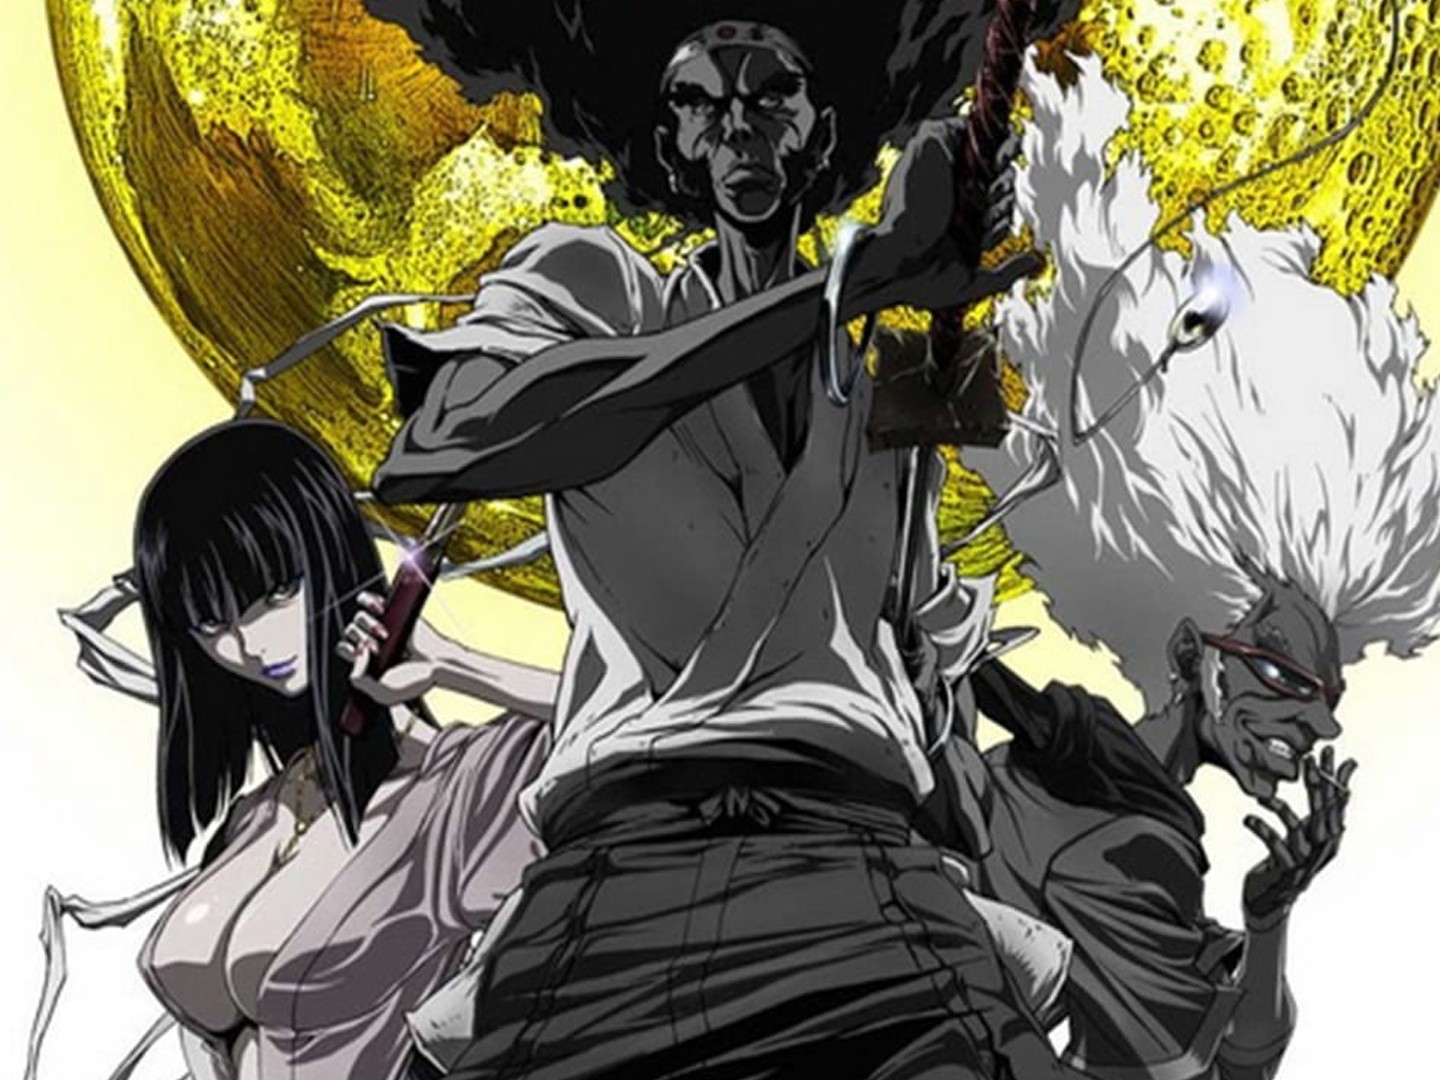 Tetsuo 𒉭 on X: The superior black samurai anime, Afro Samurai   / X